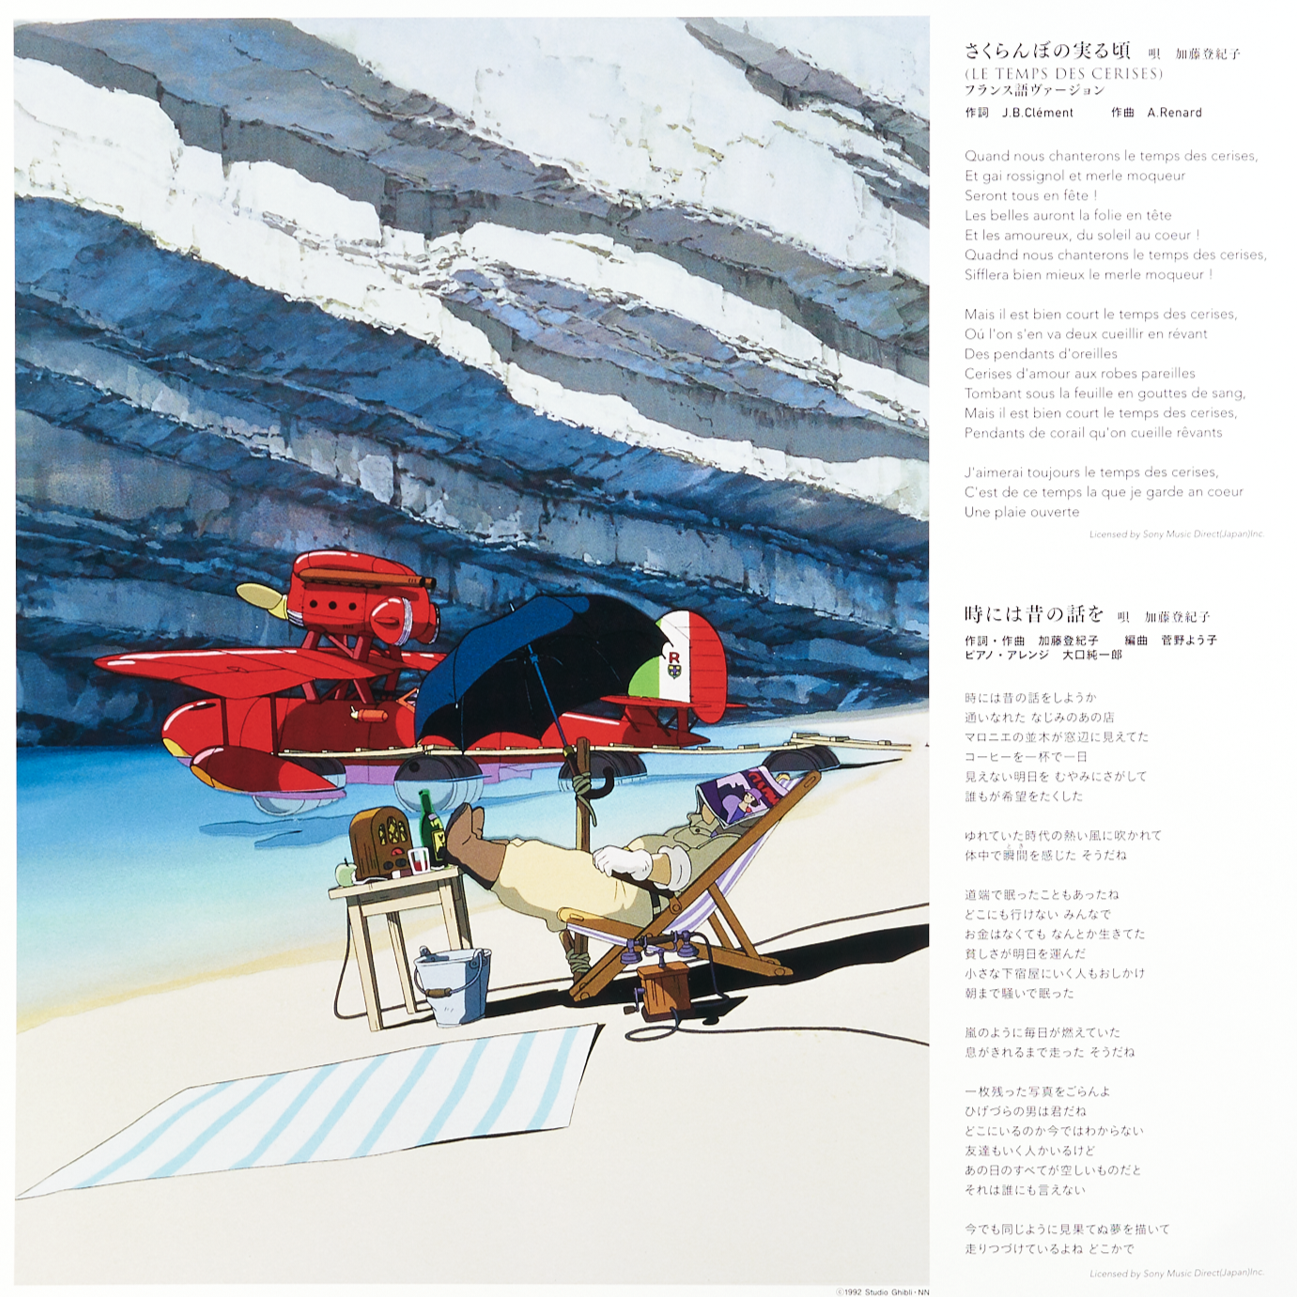 Nausicaä Of The Valley Of Wind: Image Album - Joe Hisaishi (1xLP Vinyl